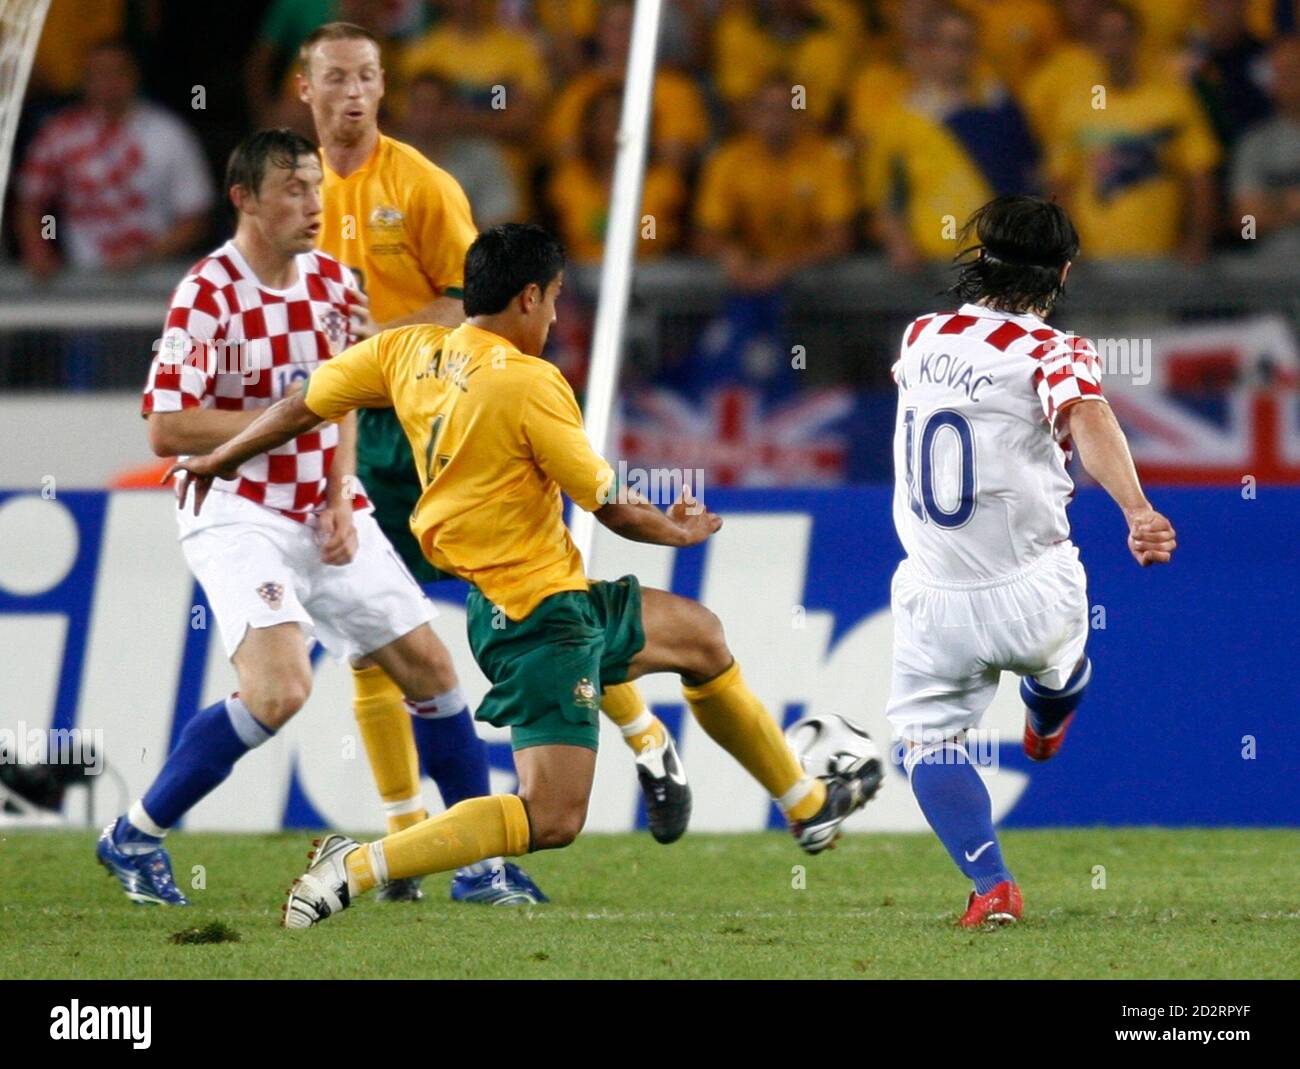 Niko kovac world cup 2006 fotografías e imágenes de alta resolución - Alamy